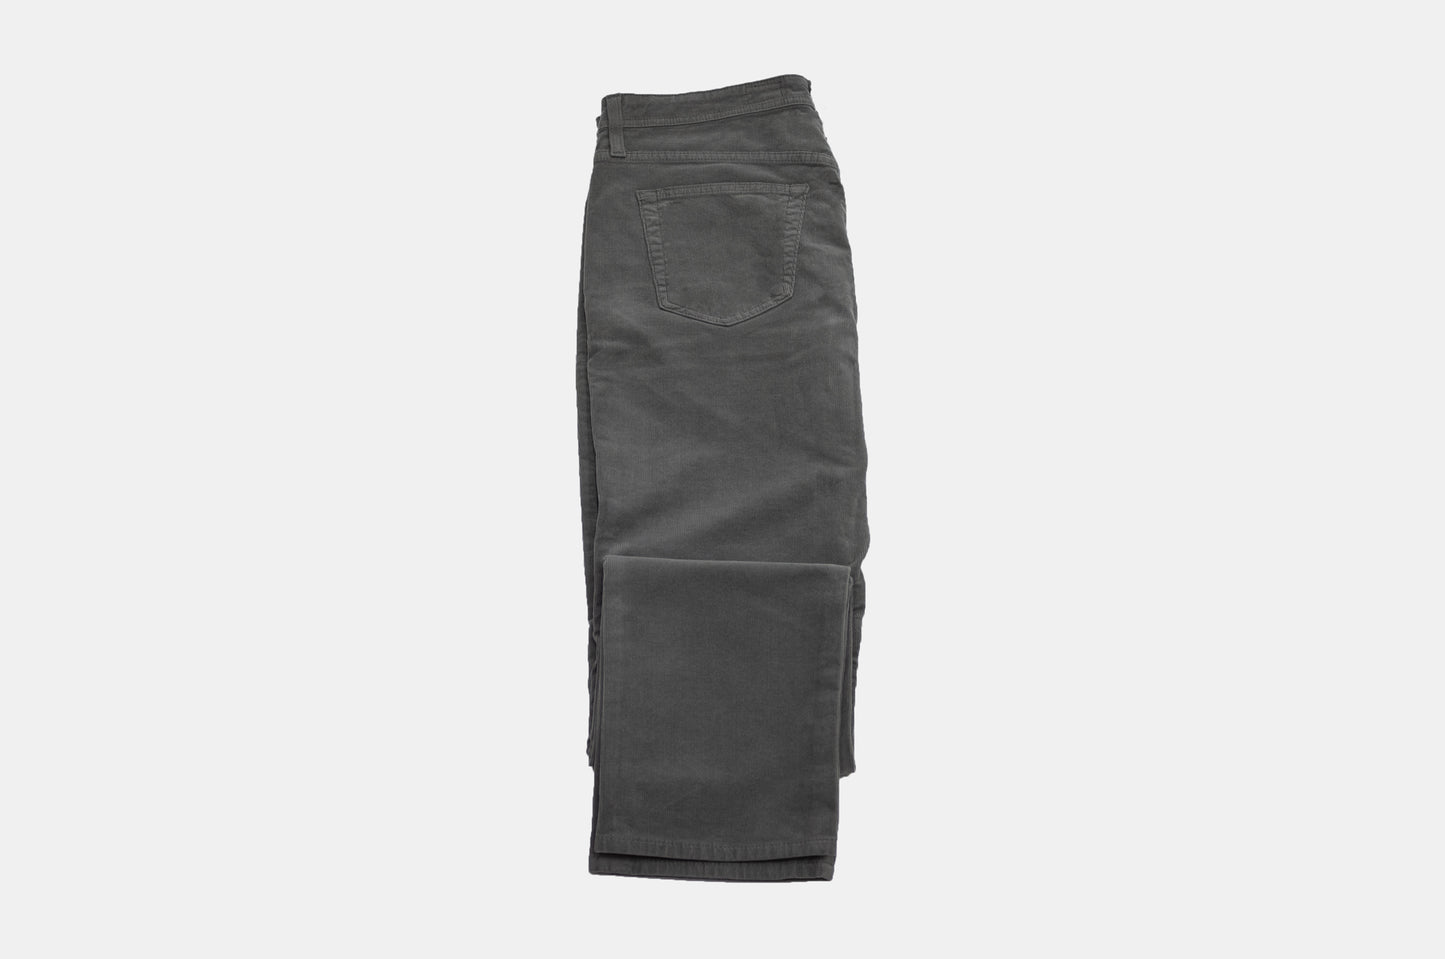 khakis of Carmel - grey corduroy pants